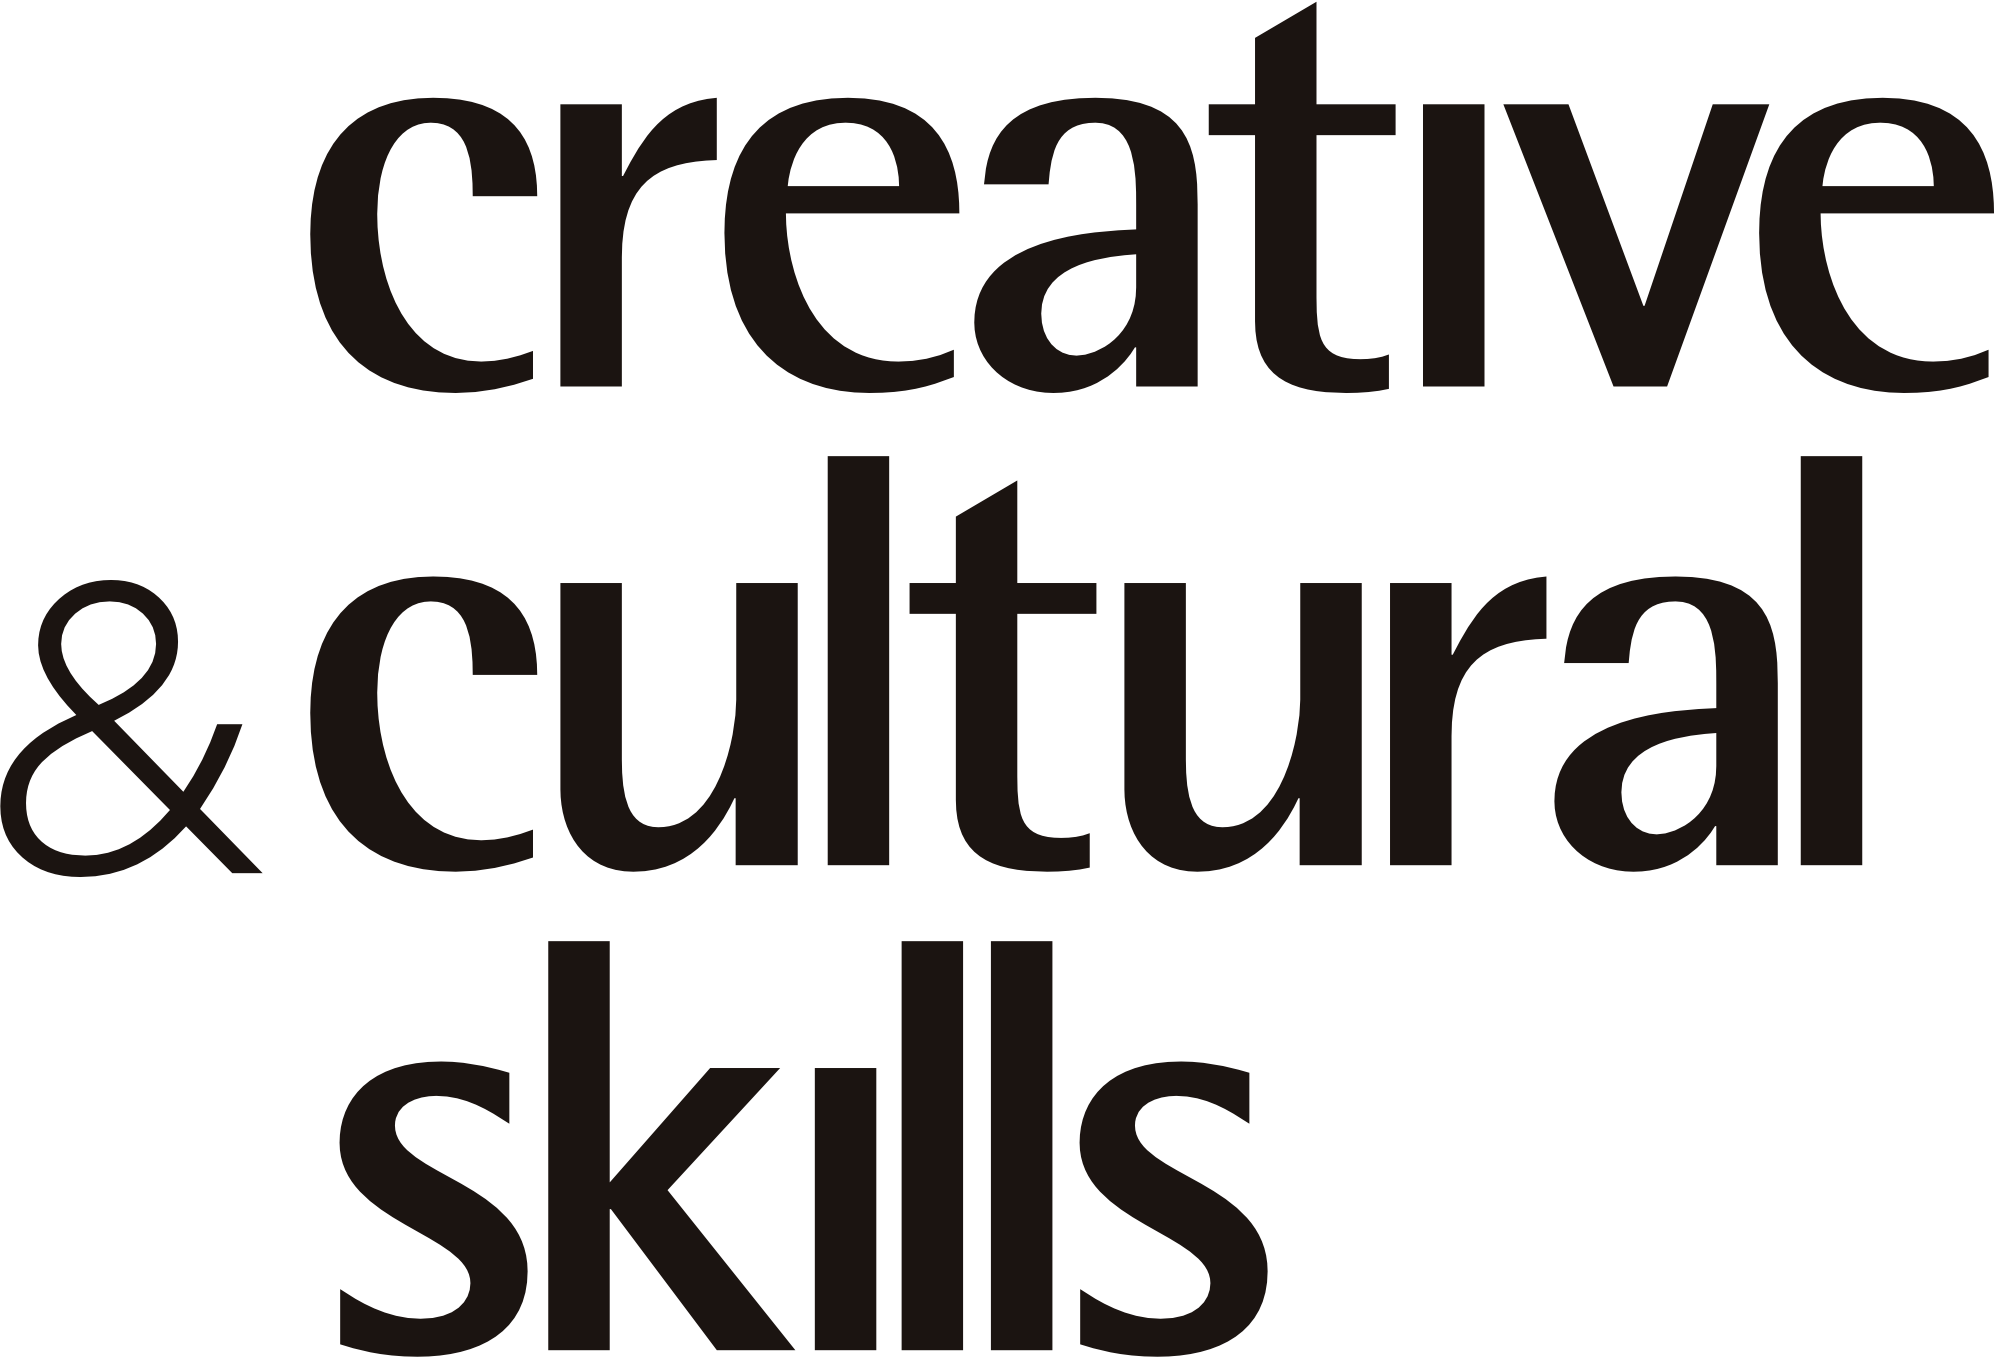 Creative & Cultural Skills Logo